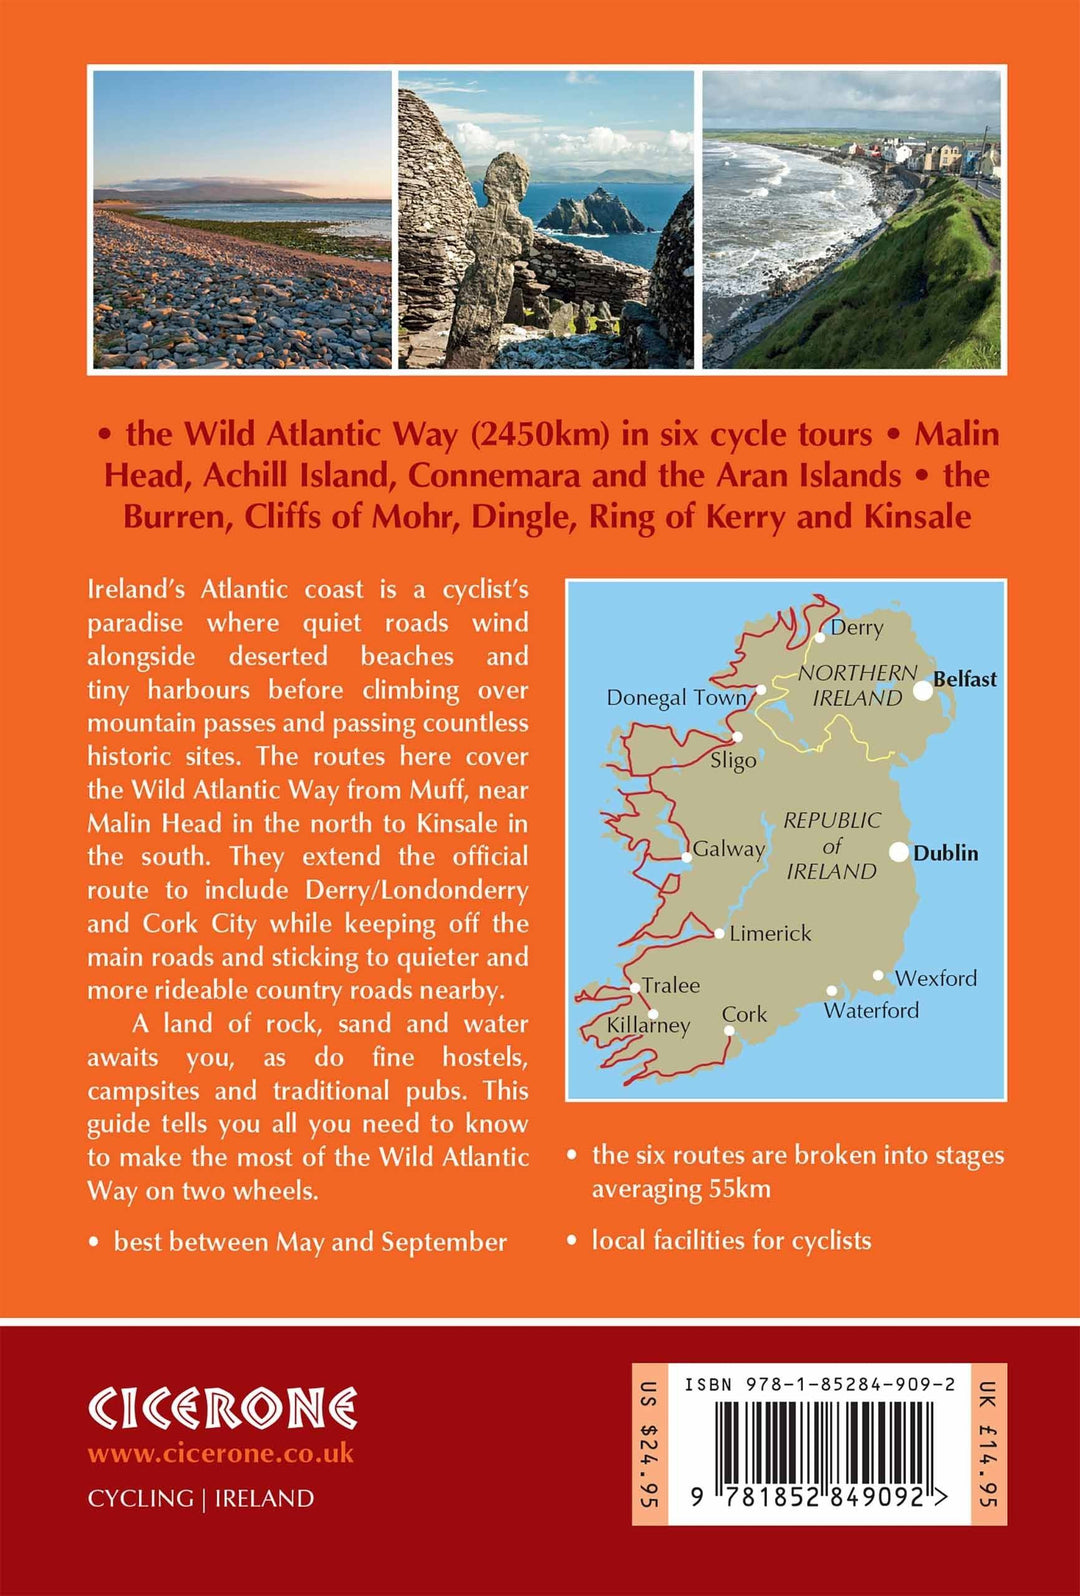 Guide cycliste (en anglais) - Wild Atlantic Way & Western Ireland : 6 cycle tours | Cicerone guide de randonnée Cicerone 